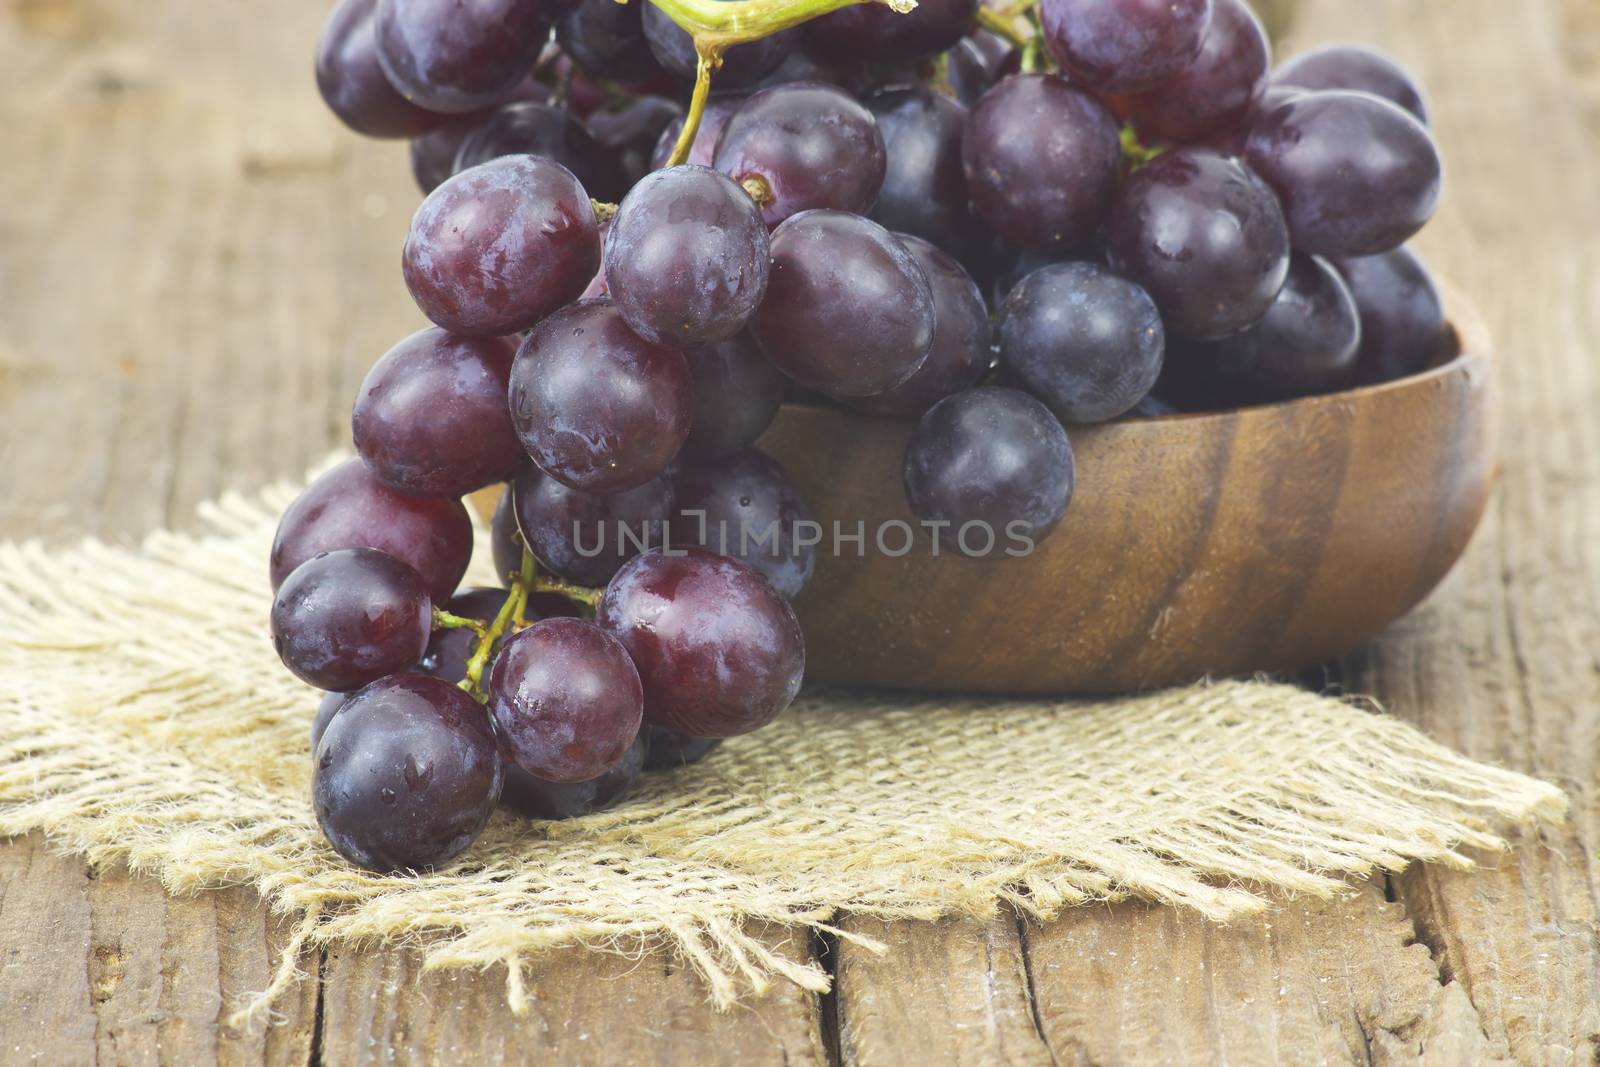 grapes in a bowl by miradrozdowski